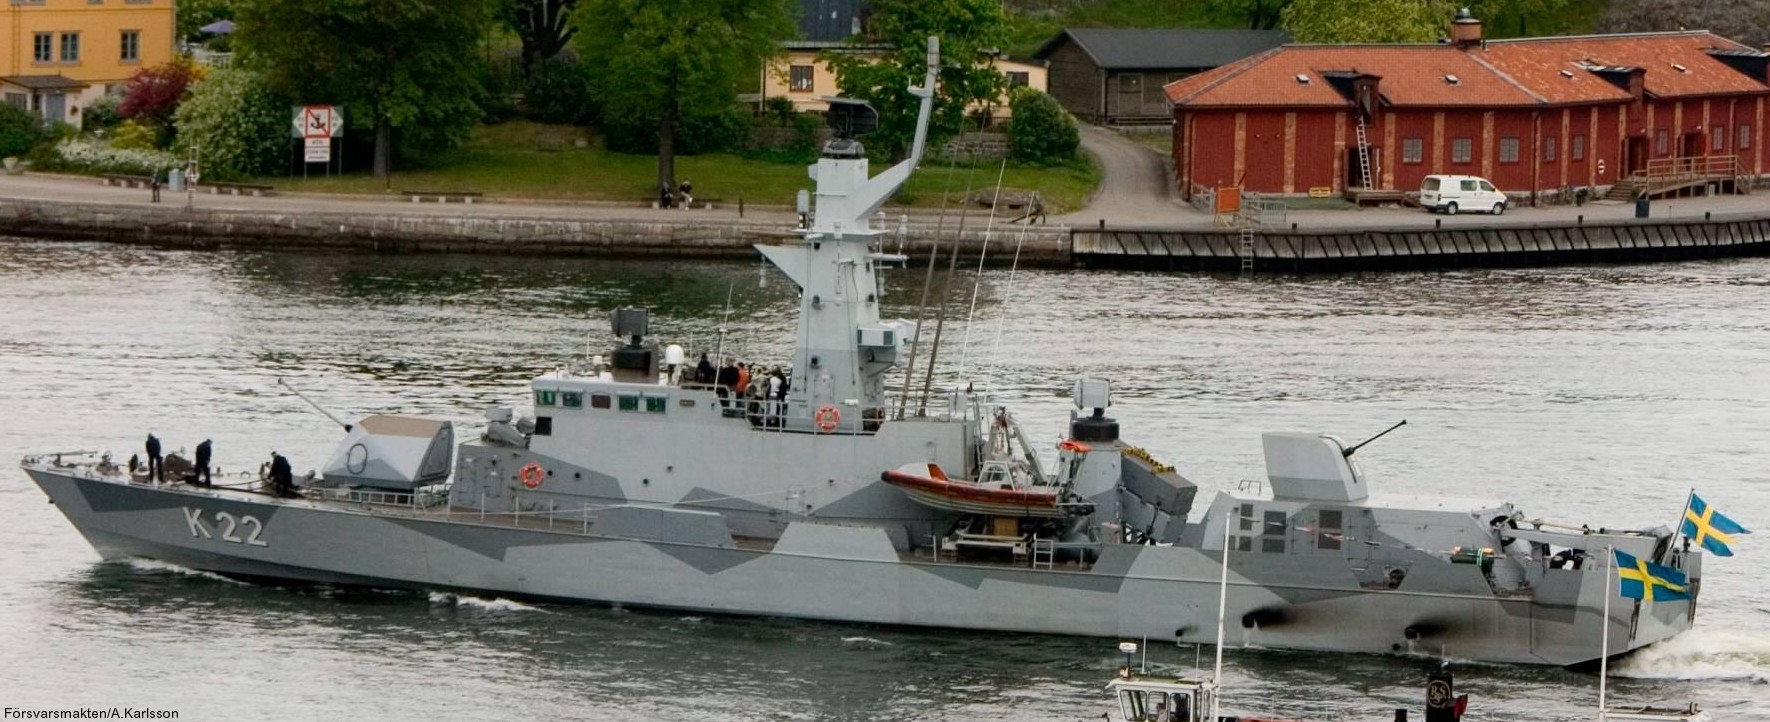 k-22 hswms hms gävle göteborg class corvette royal swedish navy svenska marinen försvarsmakten 05